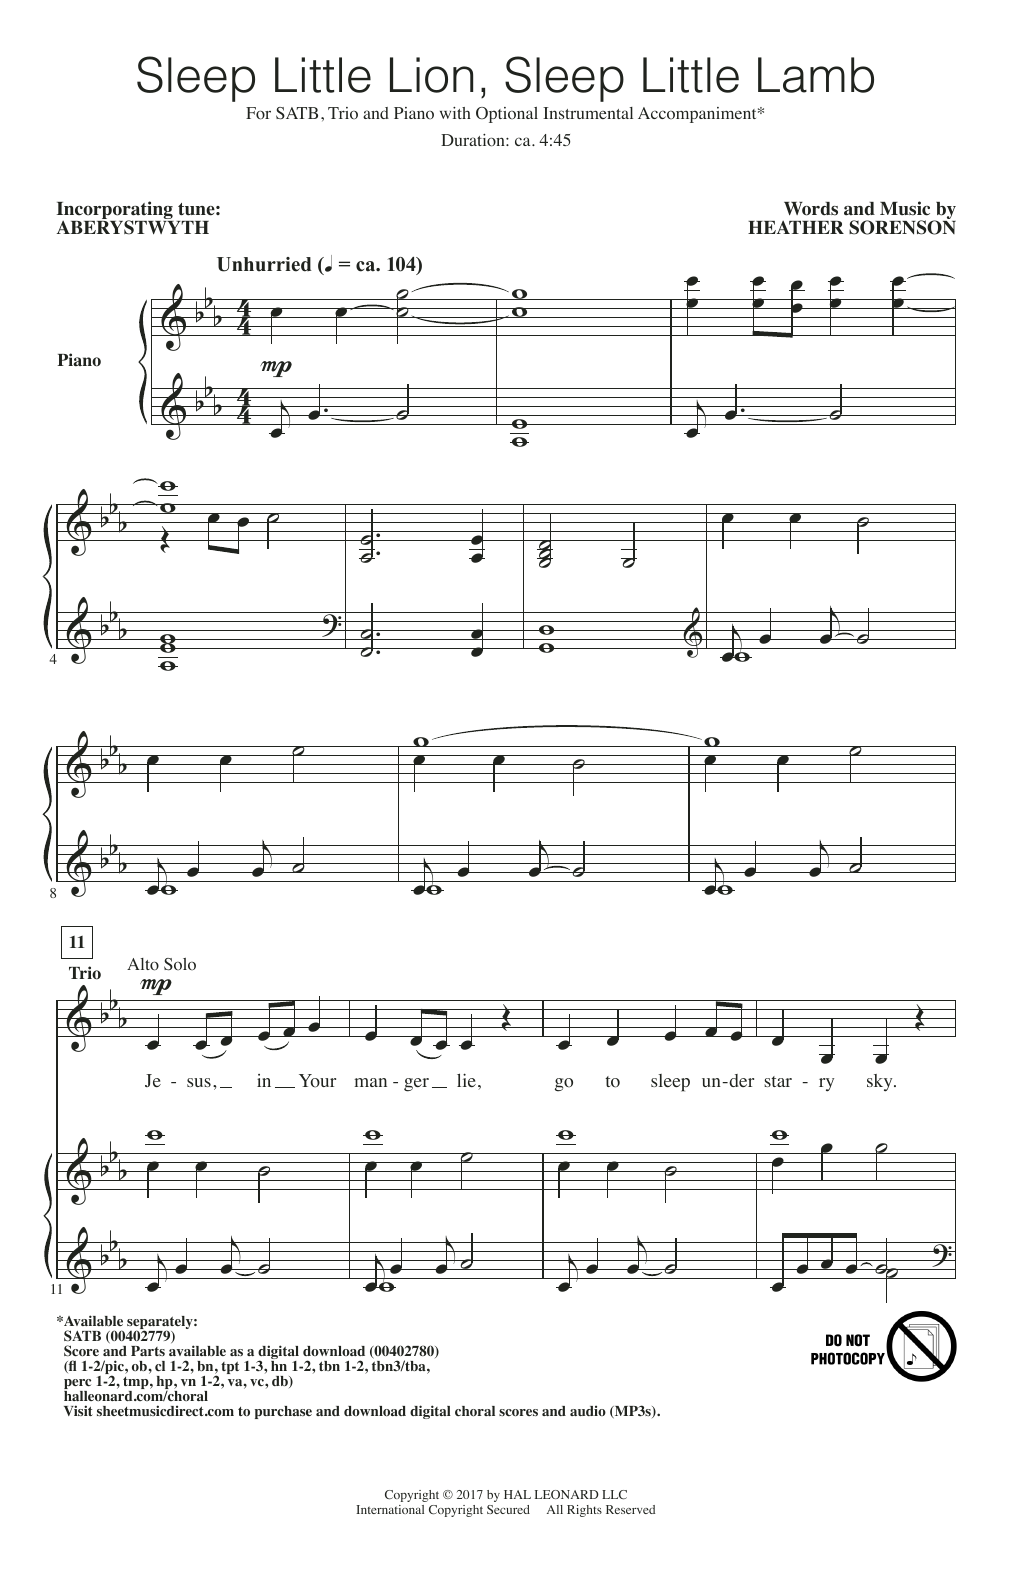 Heather Sorenson Sleep Little Lion, Sleep Little Lamb Sheet Music Notes & Chords for SATB Choir - Download or Print PDF